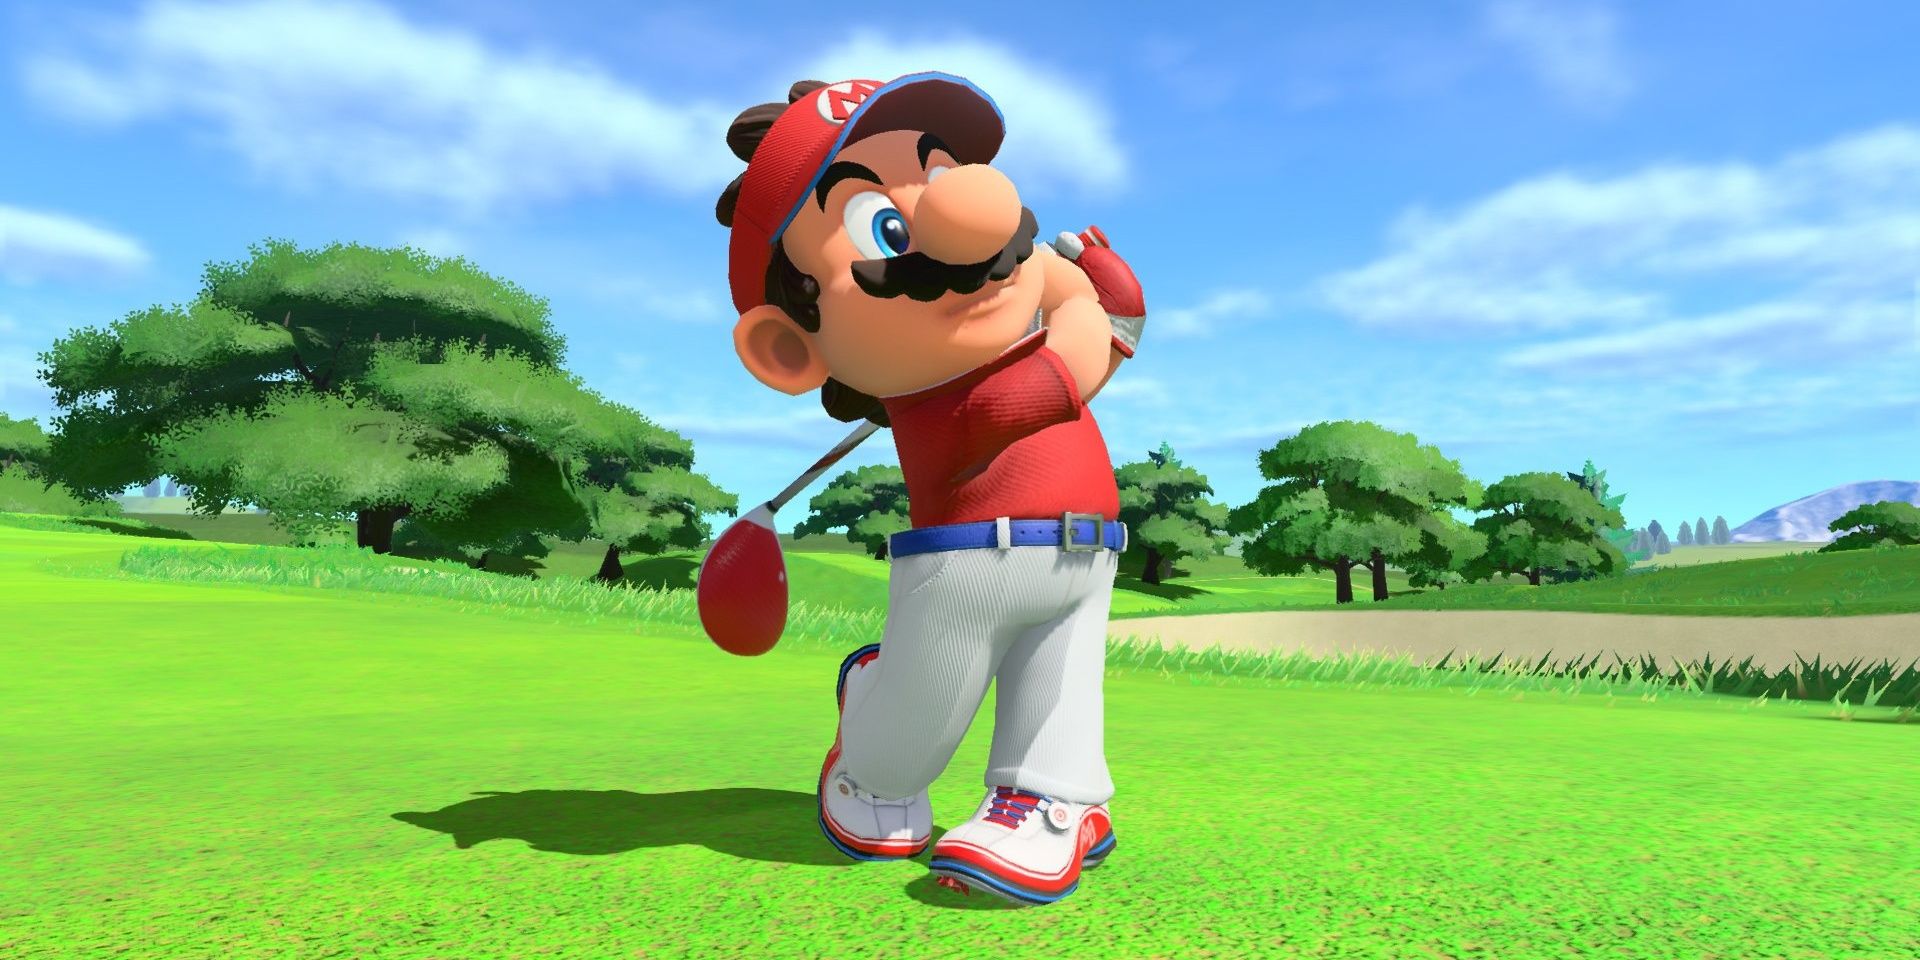 A screenshot showing Mario swinging a golf club in Mario Golf: Super Rush